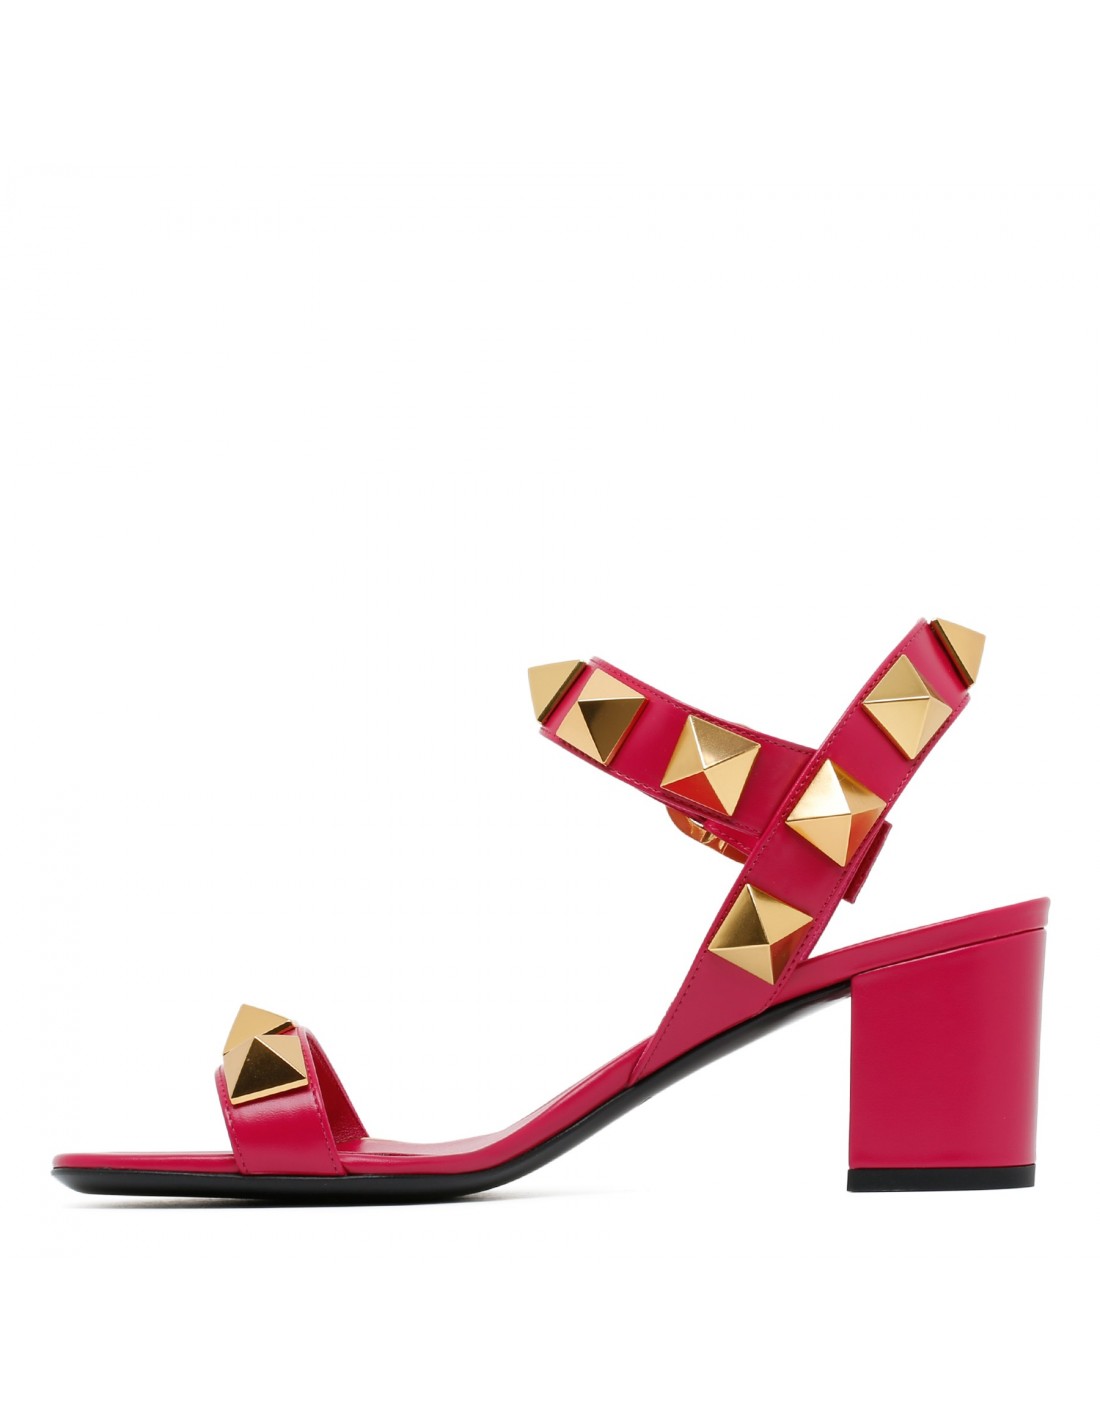 Roman stud strawberry pink leather sandals